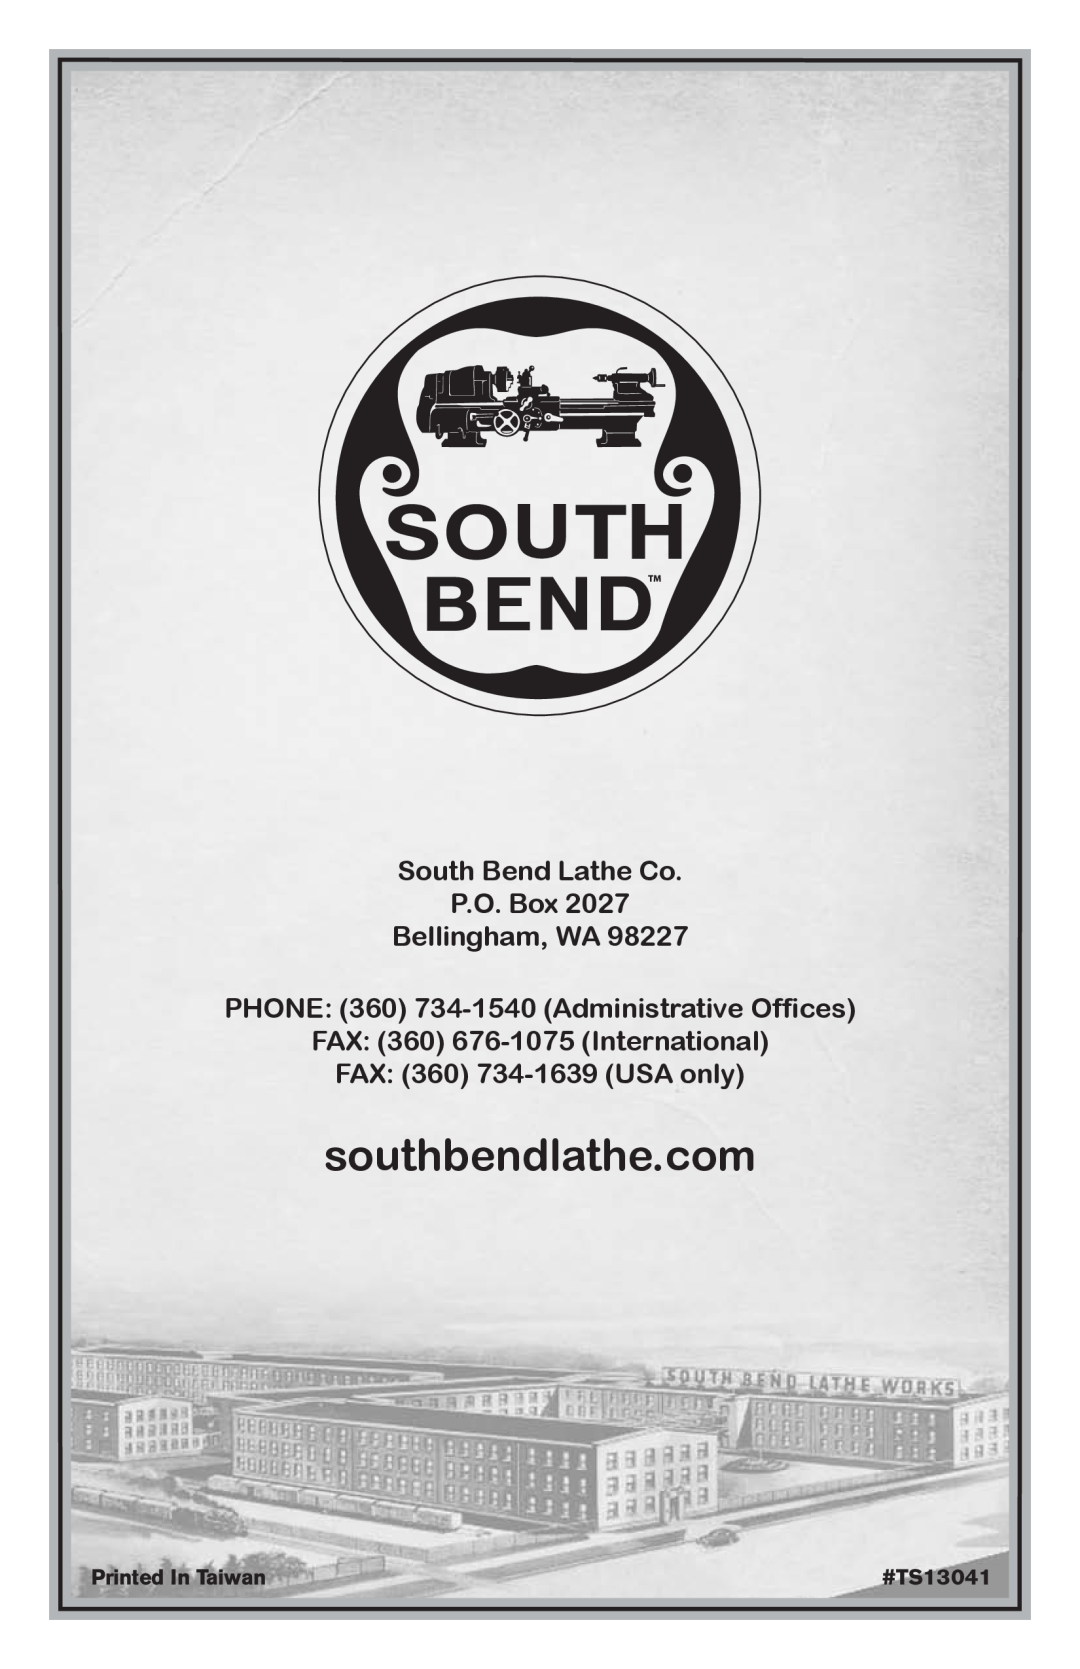 Southbend SB South Bend Lathe Co P.O. Box Bellingham, WA, PHONE 360 734-1540 Administrative Offices, southbendlathe.com 